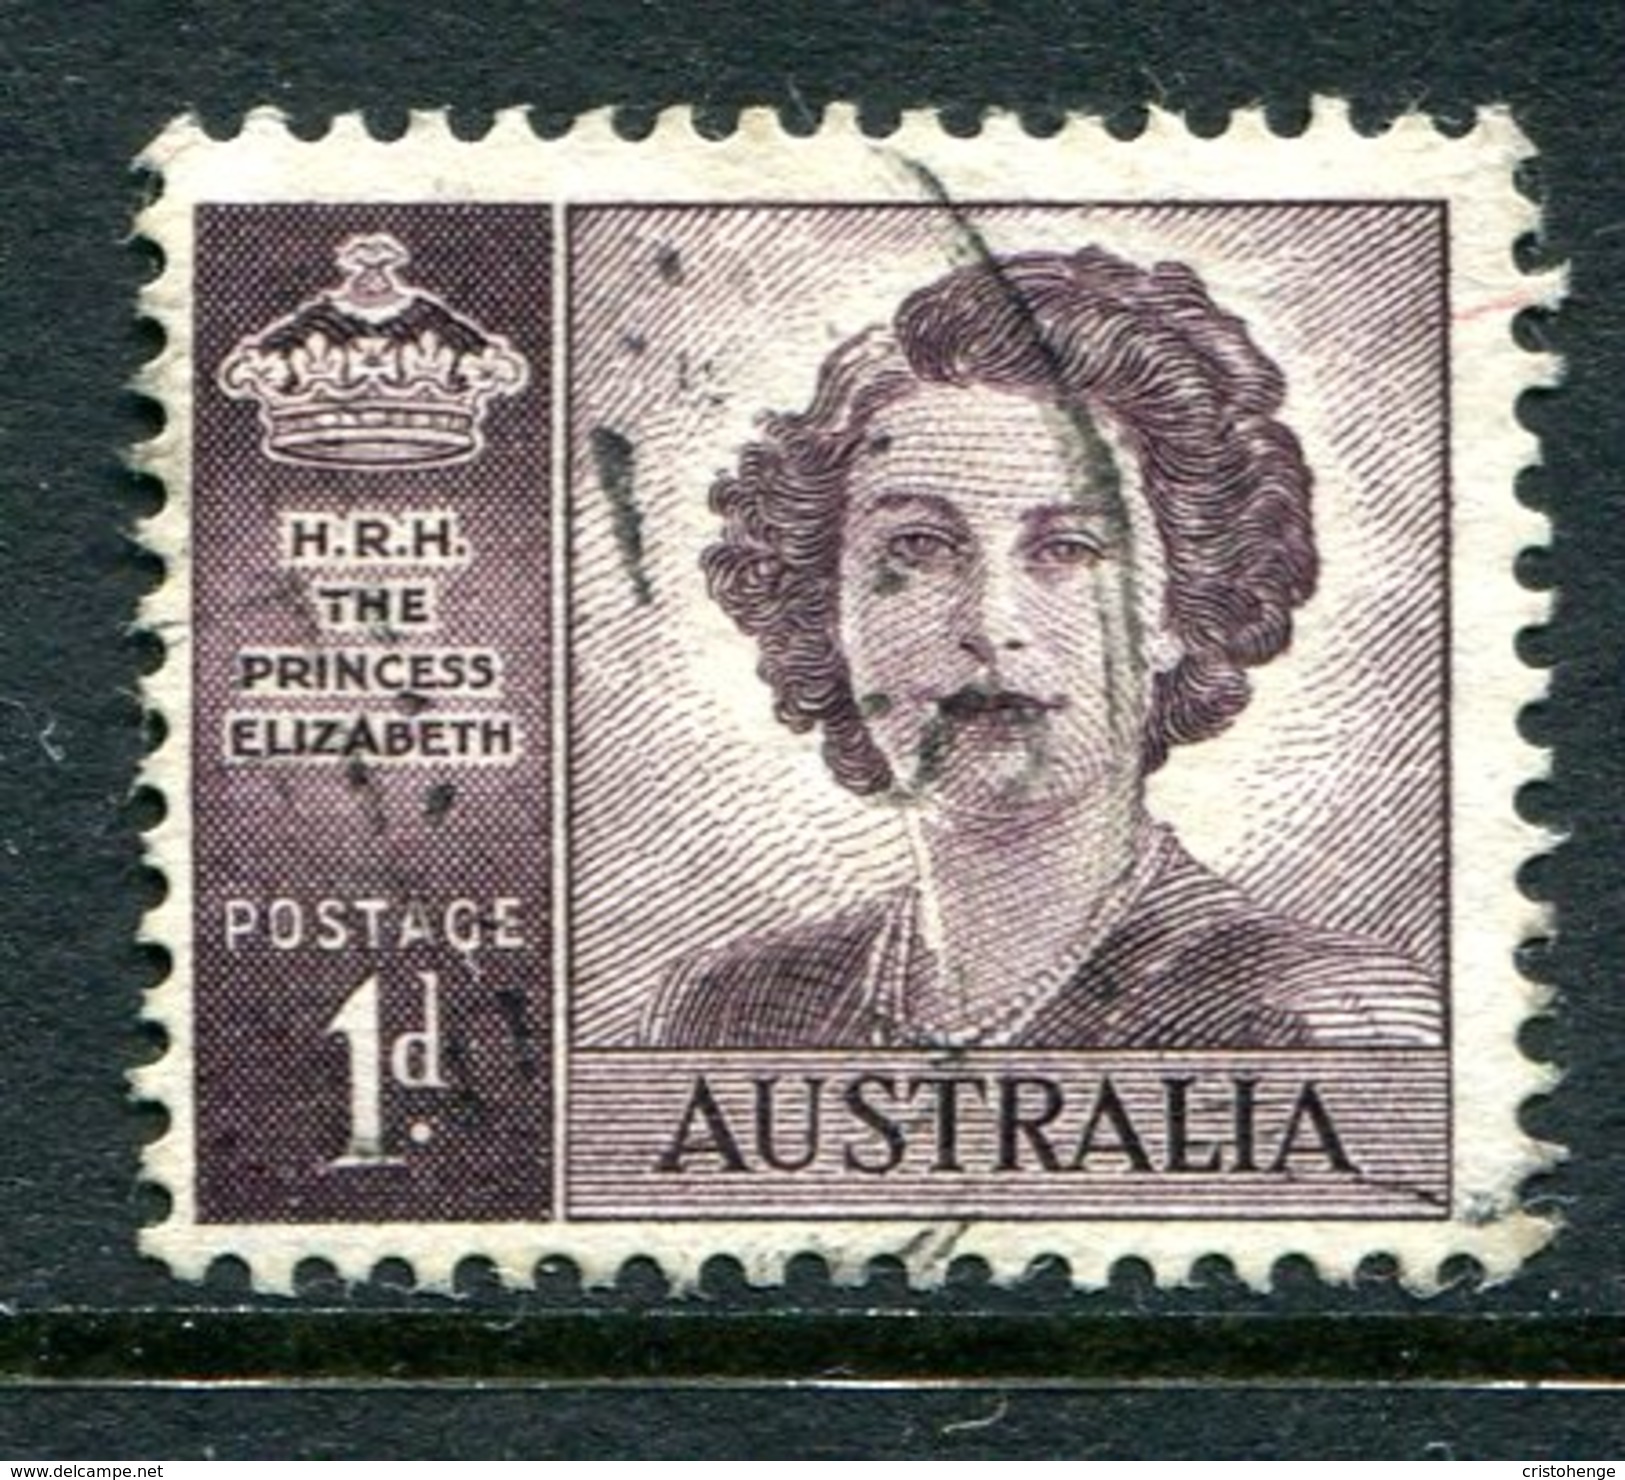 Australia 1947-52 Marriage Of Princess Elizabeth - No Wmk. Used (SG 222a) - Ongebruikt